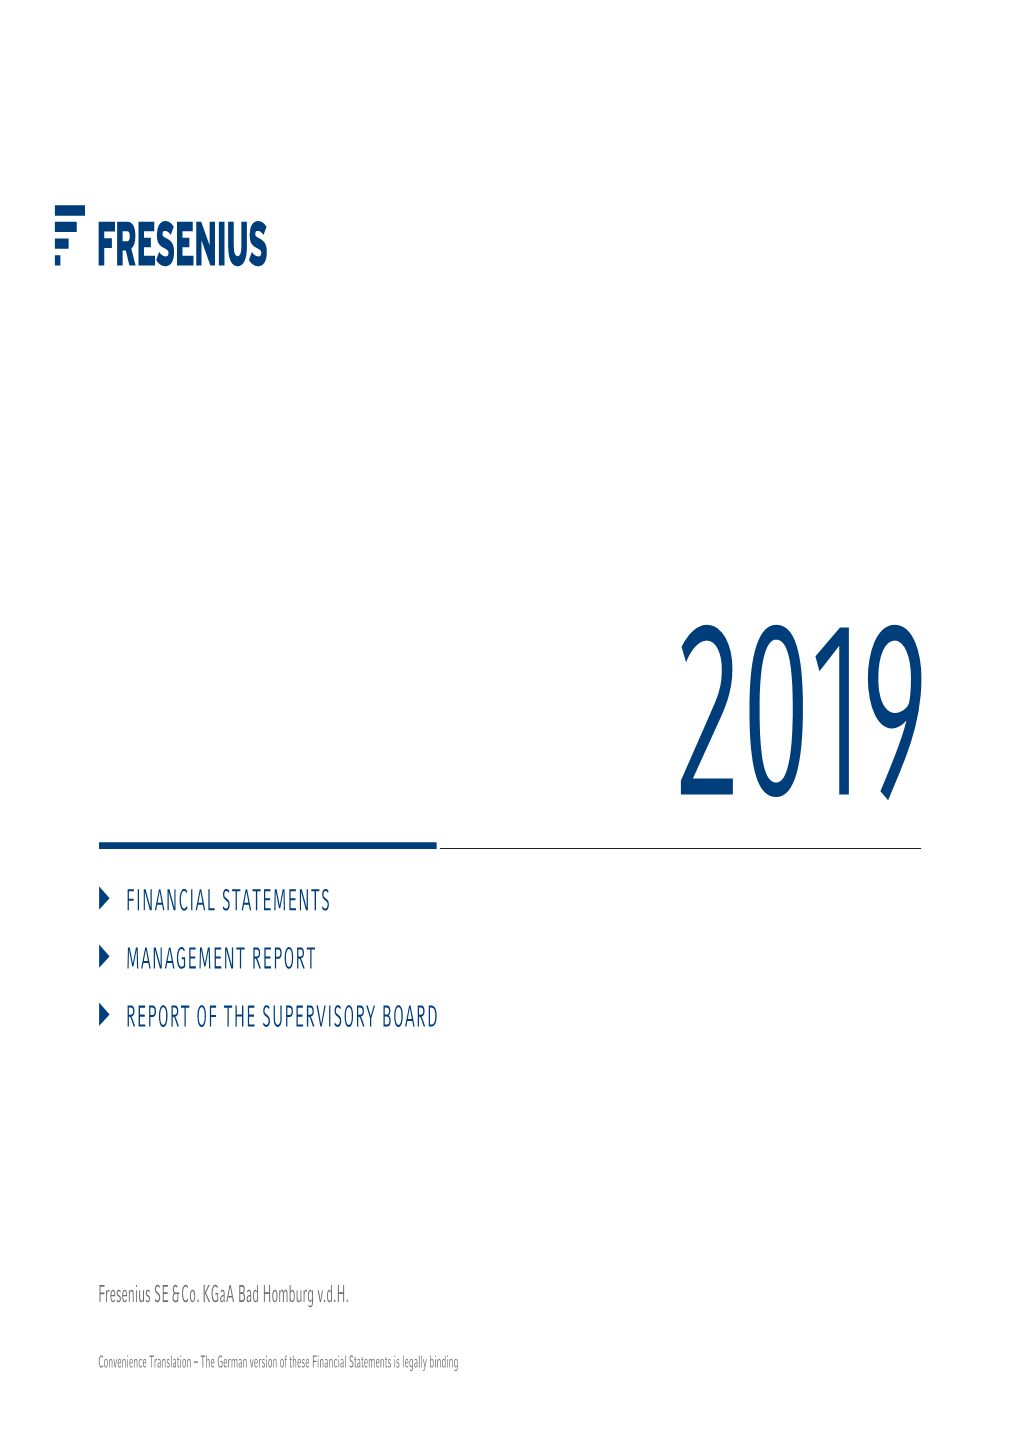 Fresenius SE & Co. Kgaa Financial Statements 2019